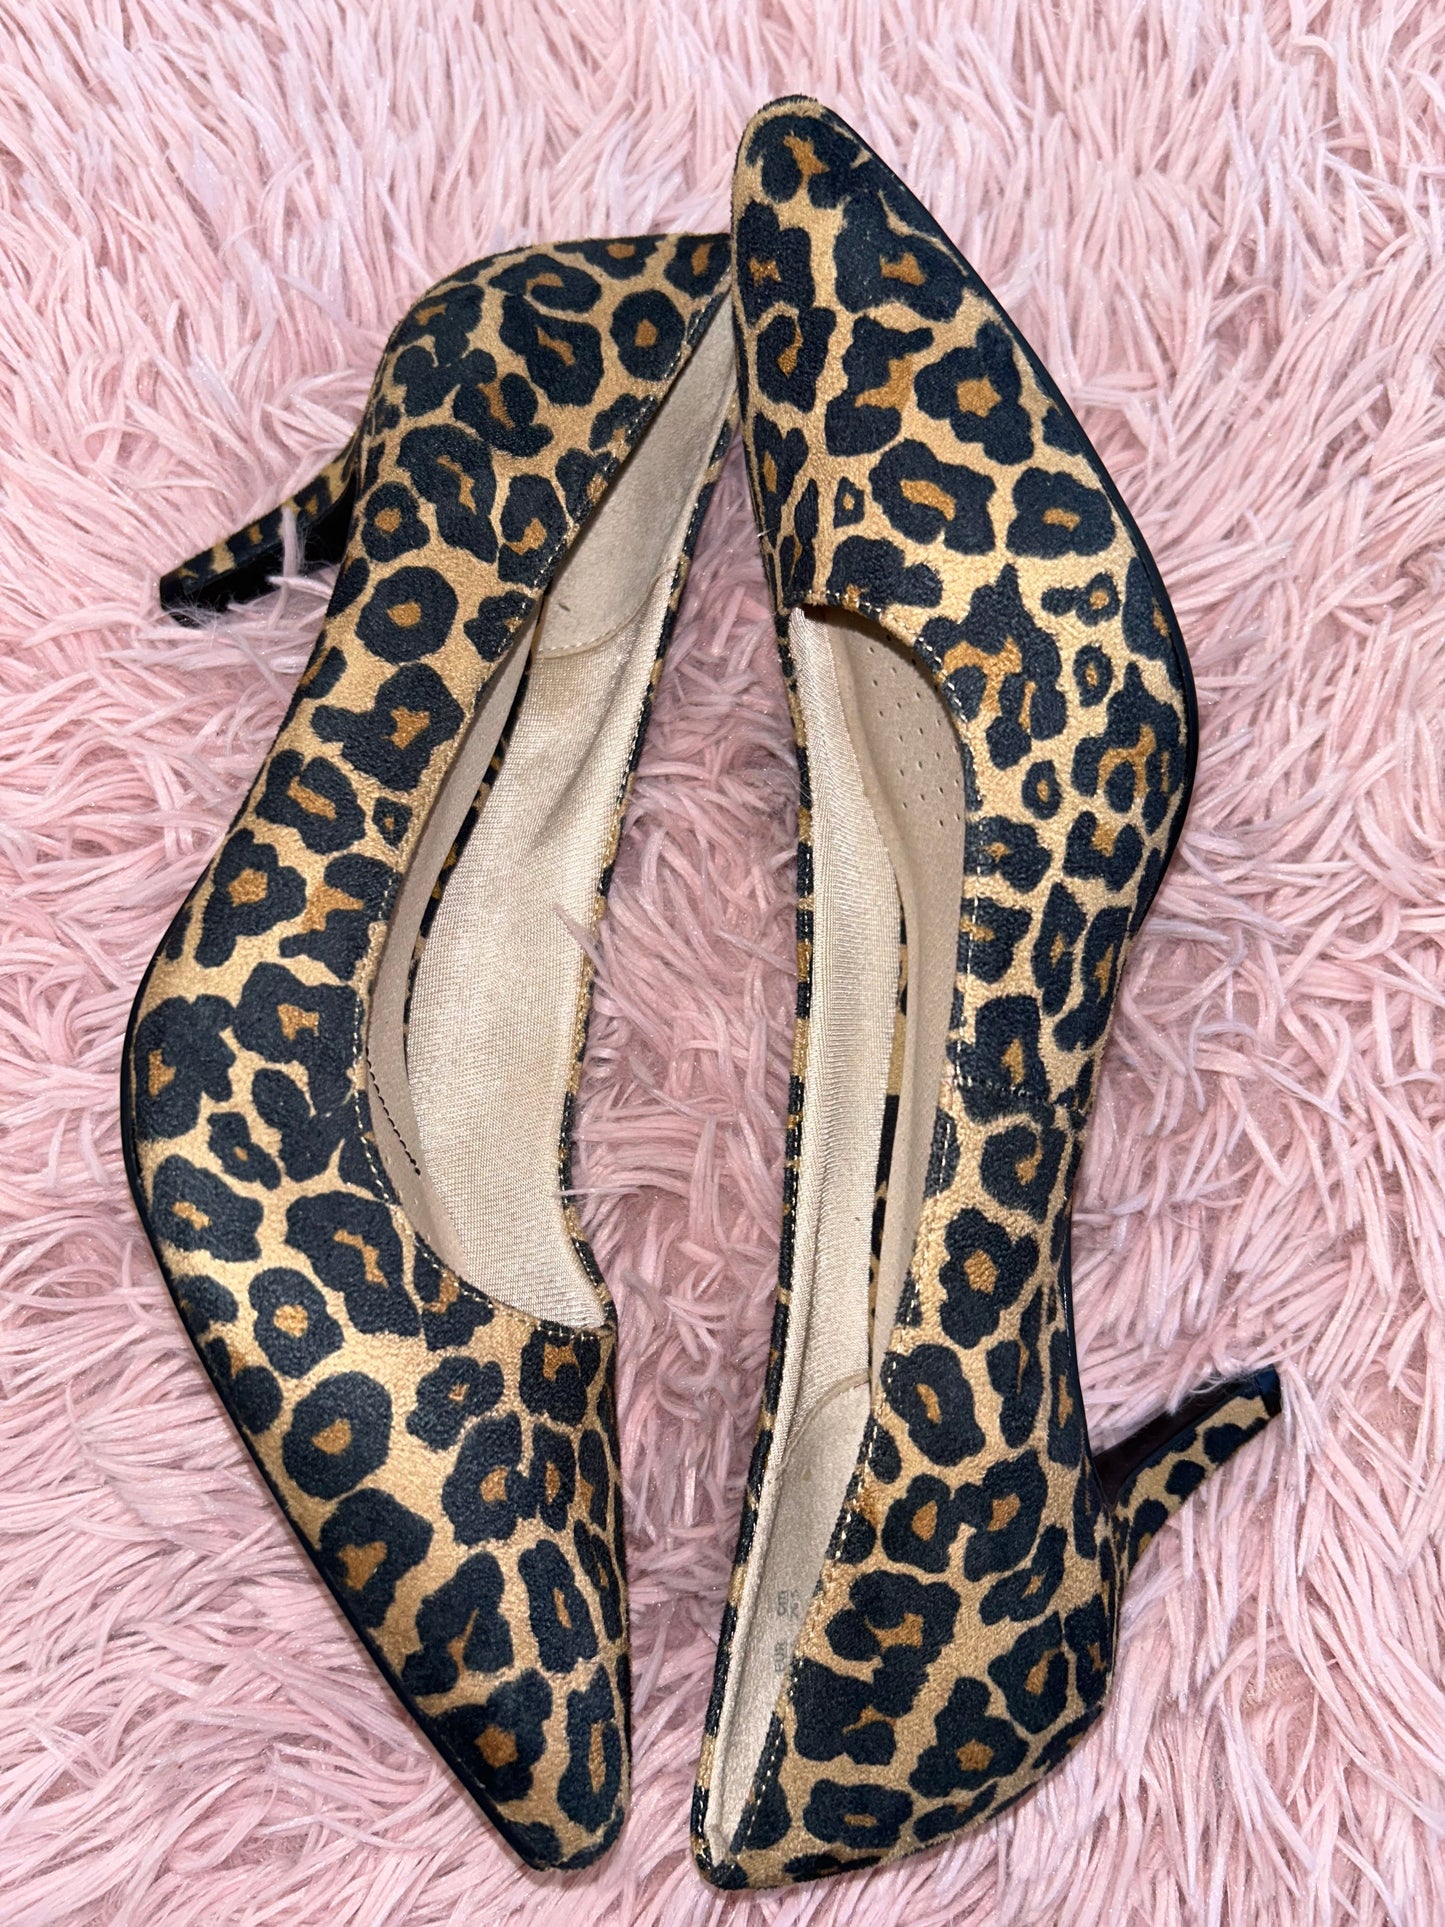 Leopard Print Shoes Heels Stiletto Life Stride, Size 9.5